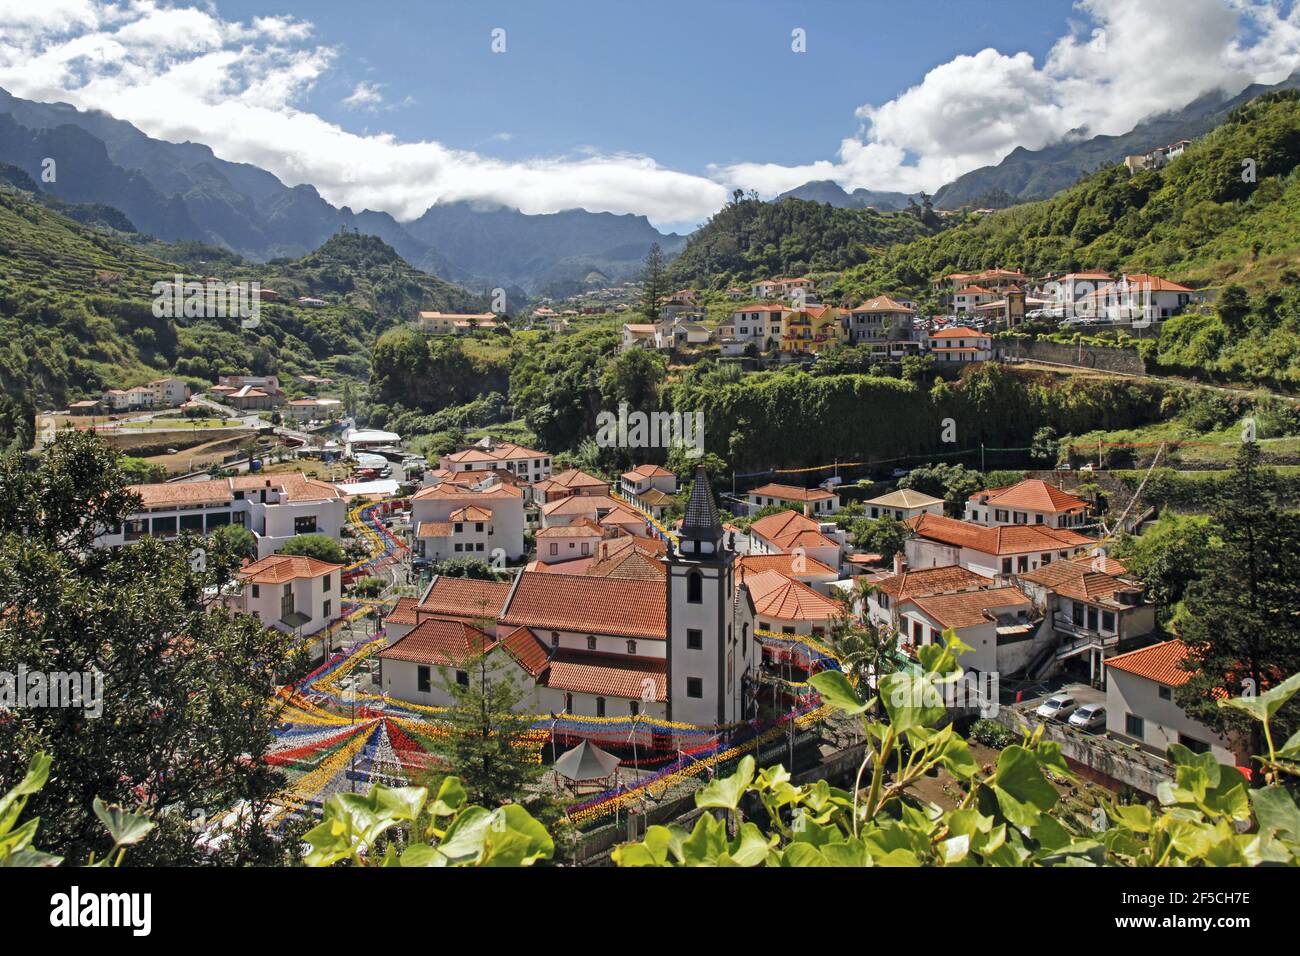 Geographie / Reisen, Portugal, Madeira Isle, Altstadt von Sao Vicente mit dem barocken paris, Additional-Rights-Clearance-Info-not-available Stockfoto